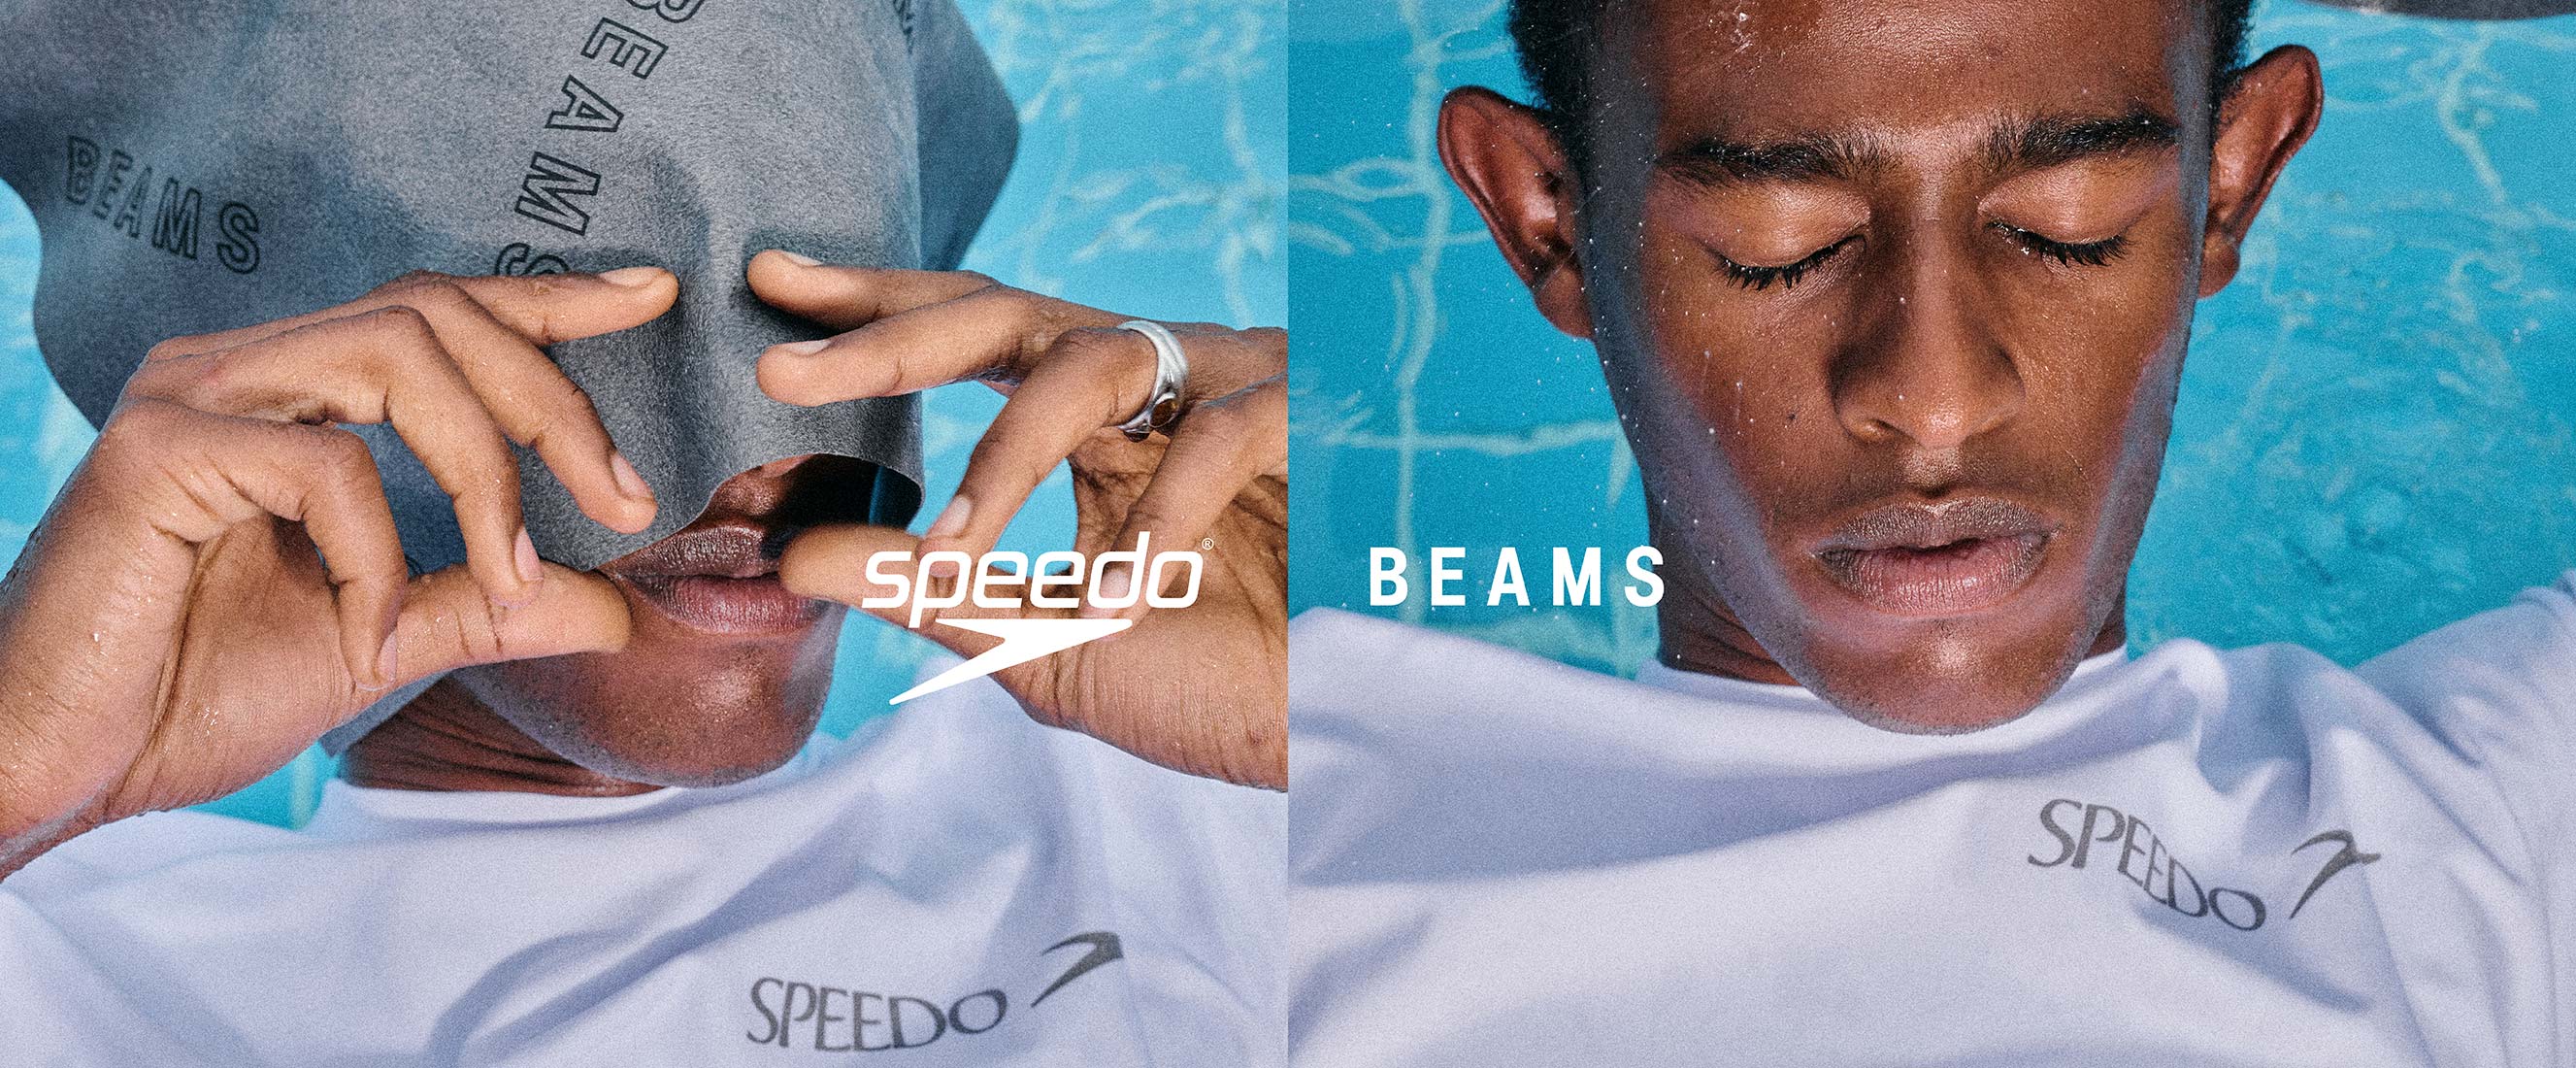 BEAMS×Speedo